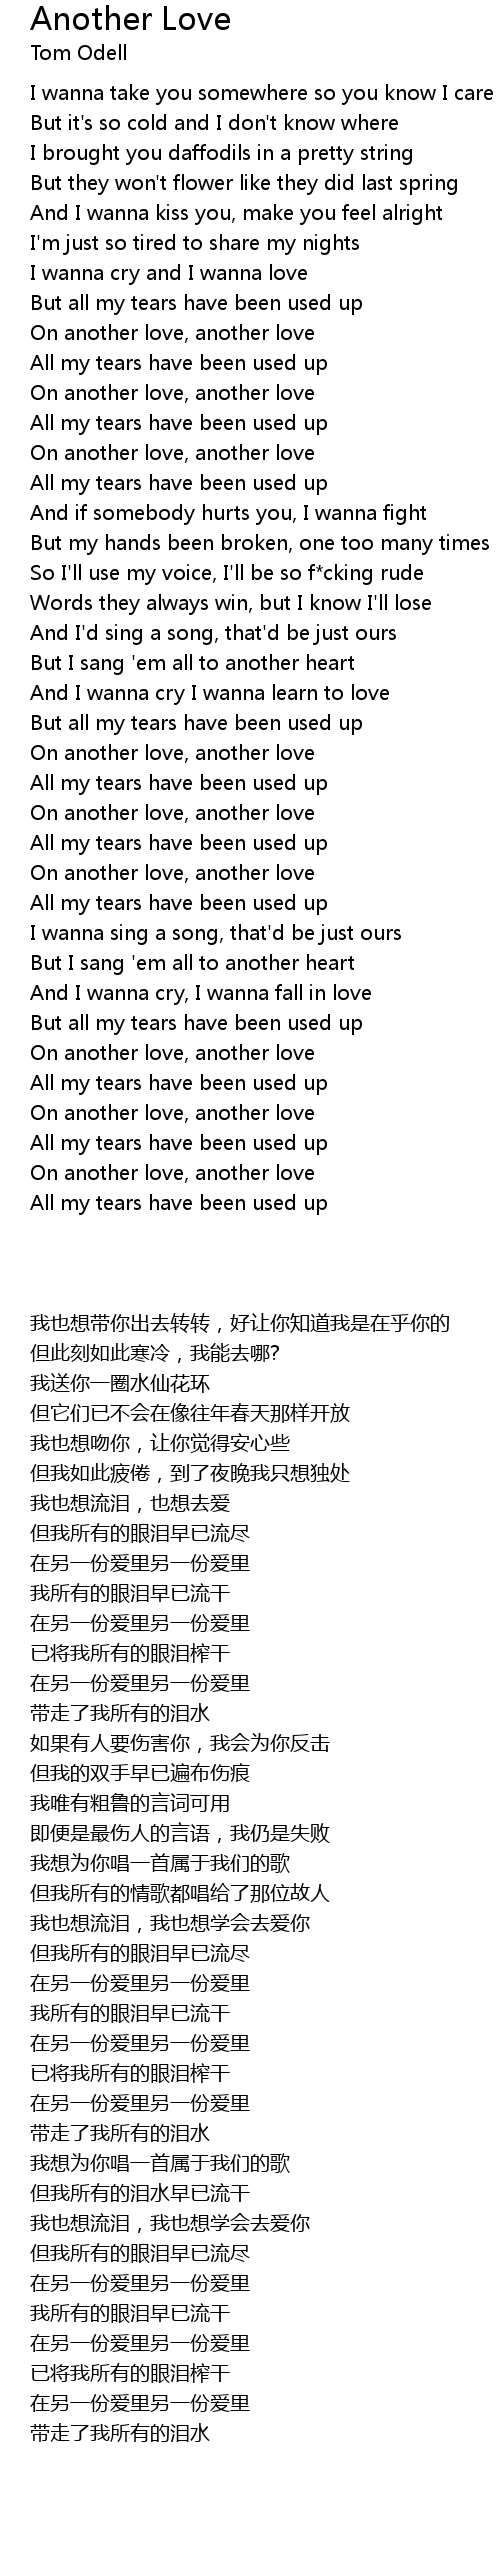 Tom Odell - Another Love 🪐  #traducciones #letras #lyrics